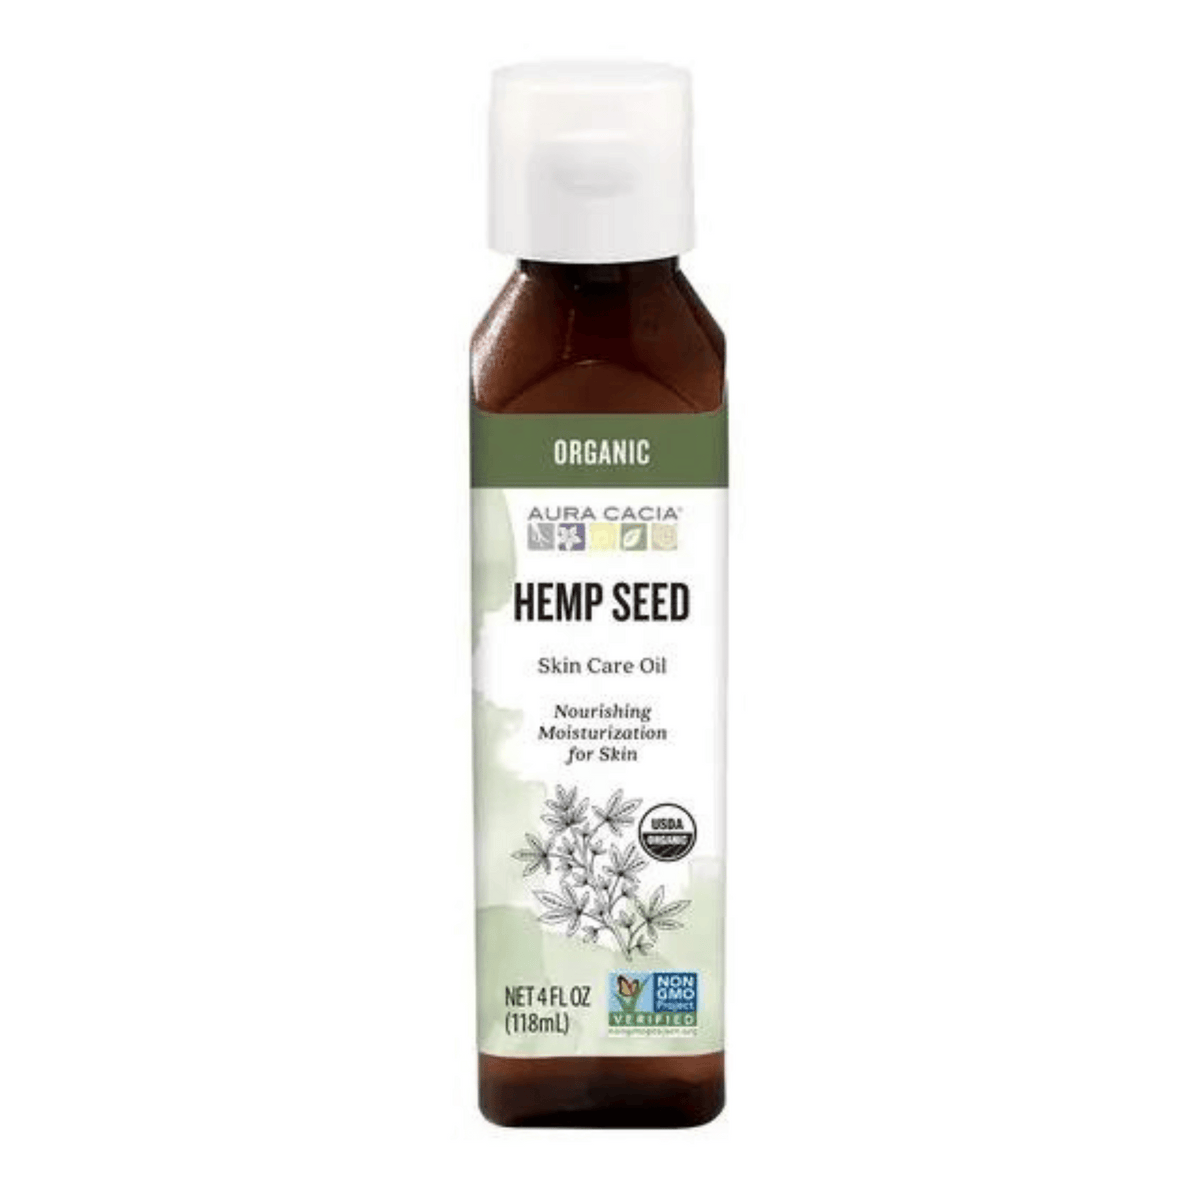 Primary Image of Hemp Seed Skin Care Oil